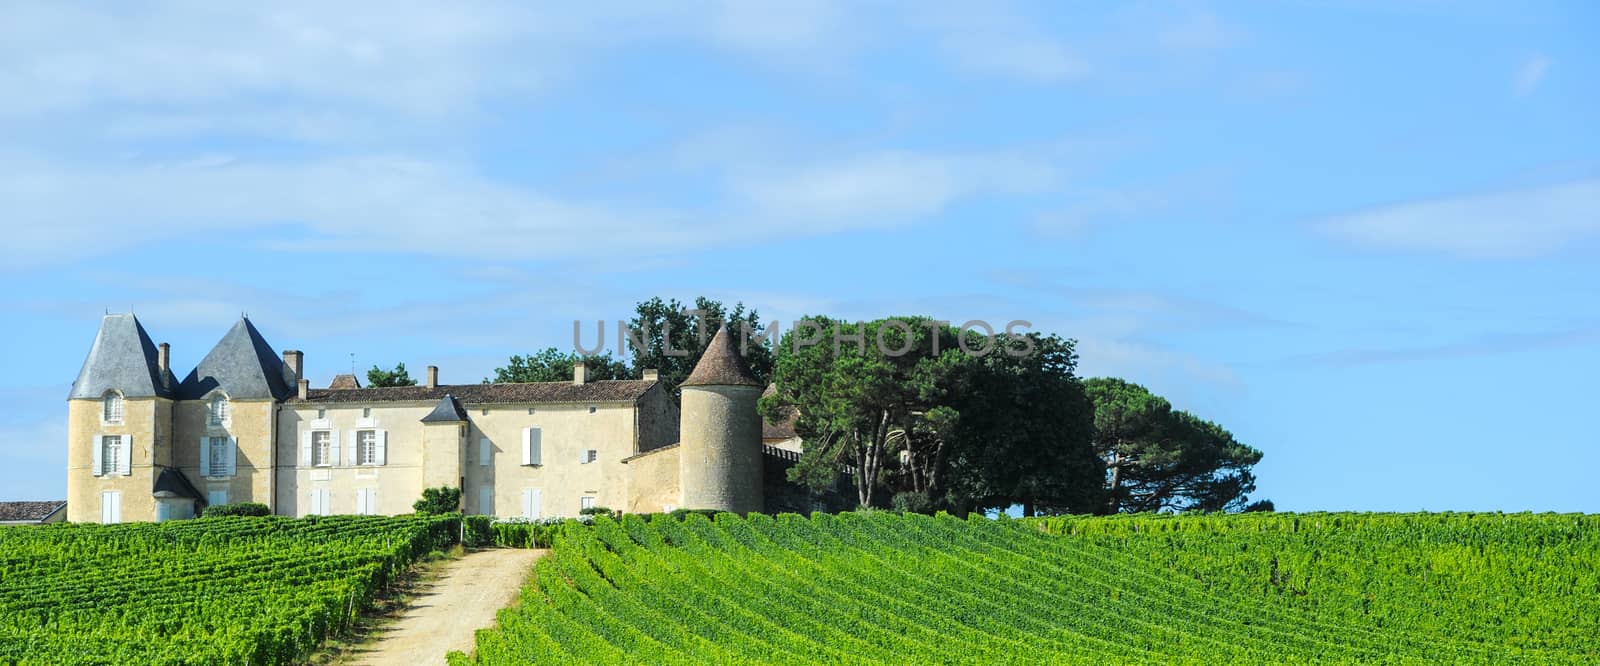 Vineyard and Chateau, Sauternes Region, Aquitaine, France